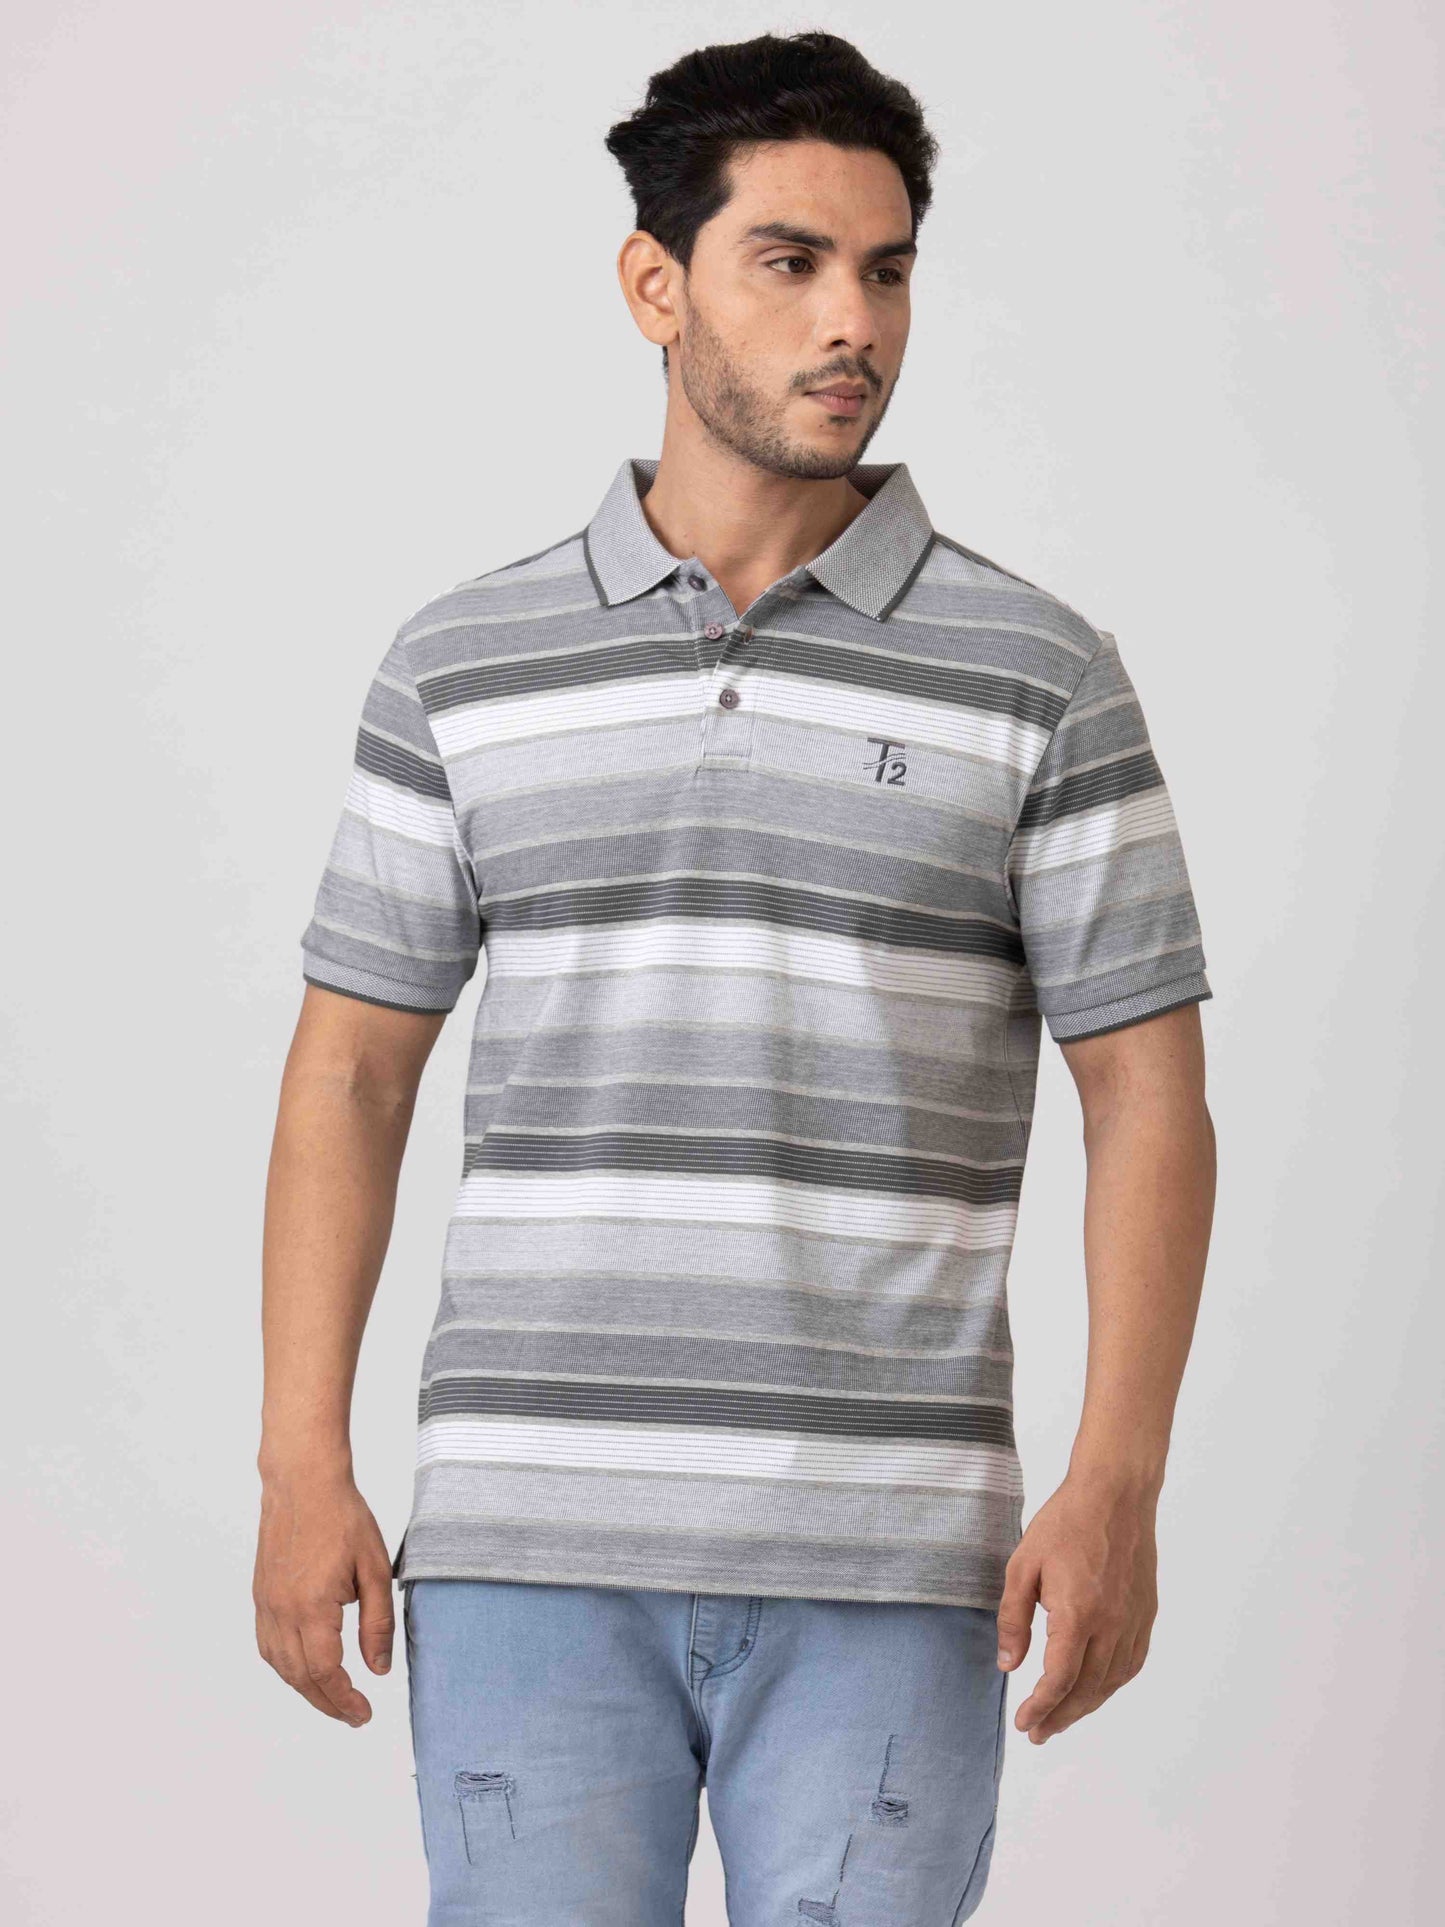 Everyday Essentials Classic & Comfortable 100% Cotton Mens Collar T-Shirt